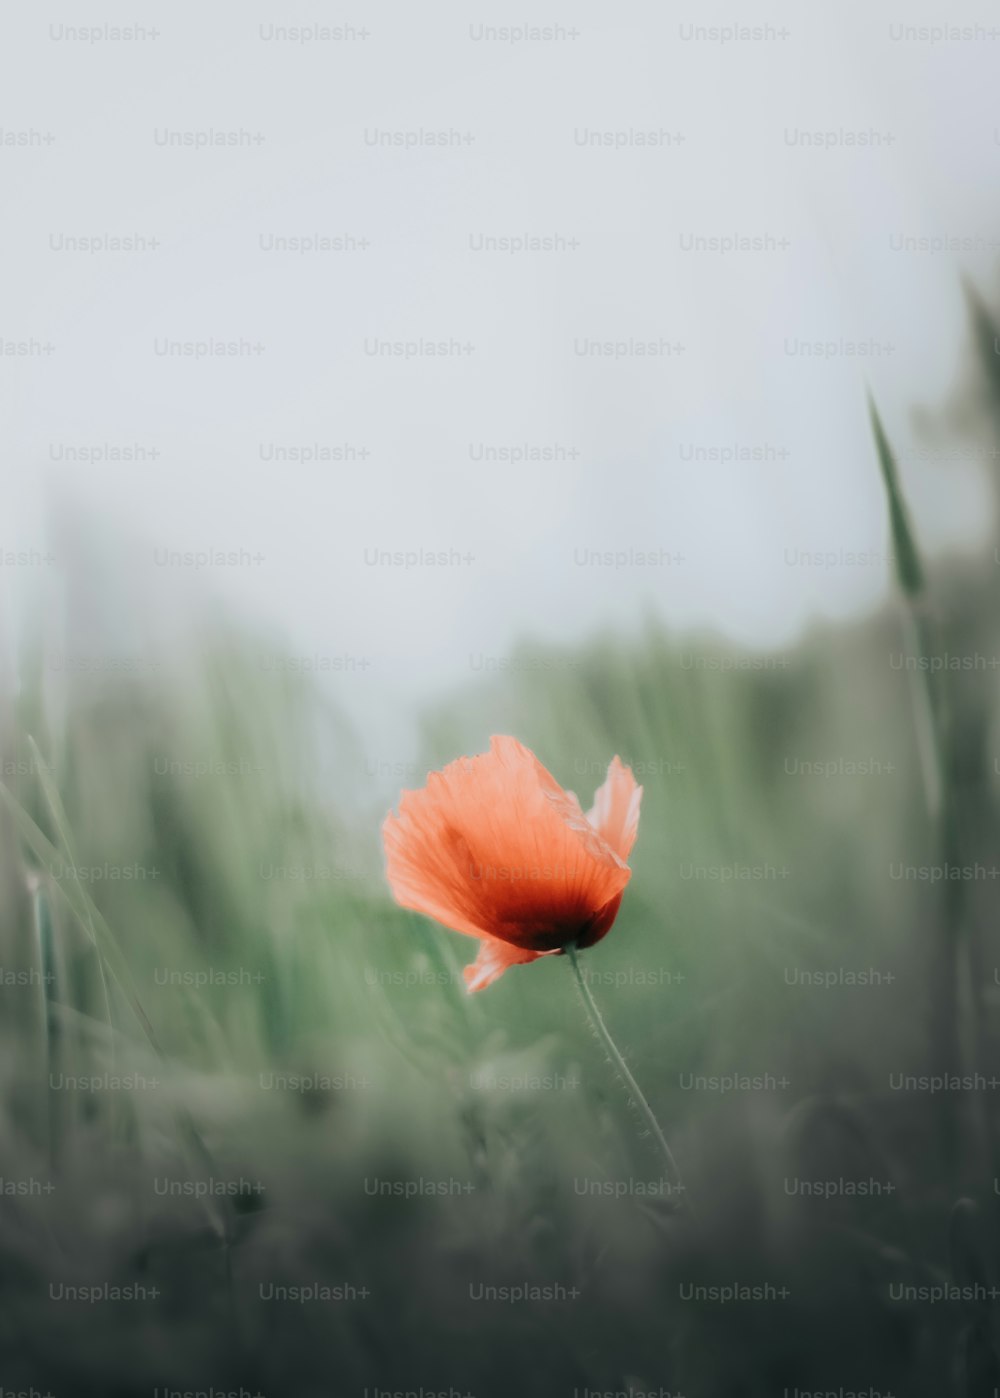 a single red flower in a grassy field